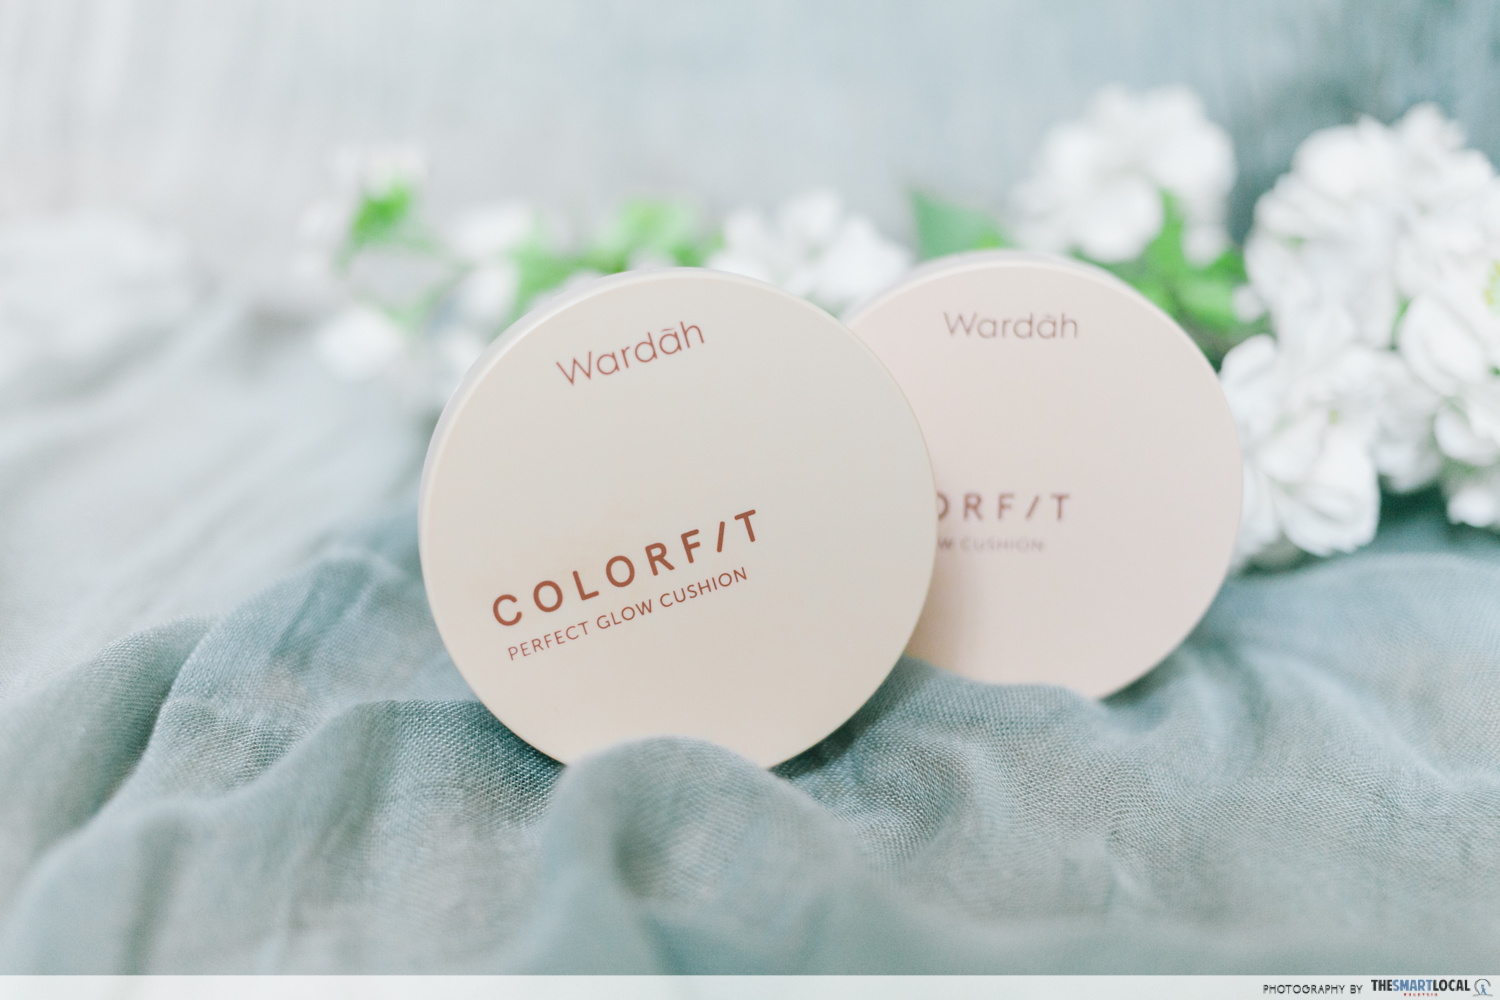 Wardah ColorFit - compacts